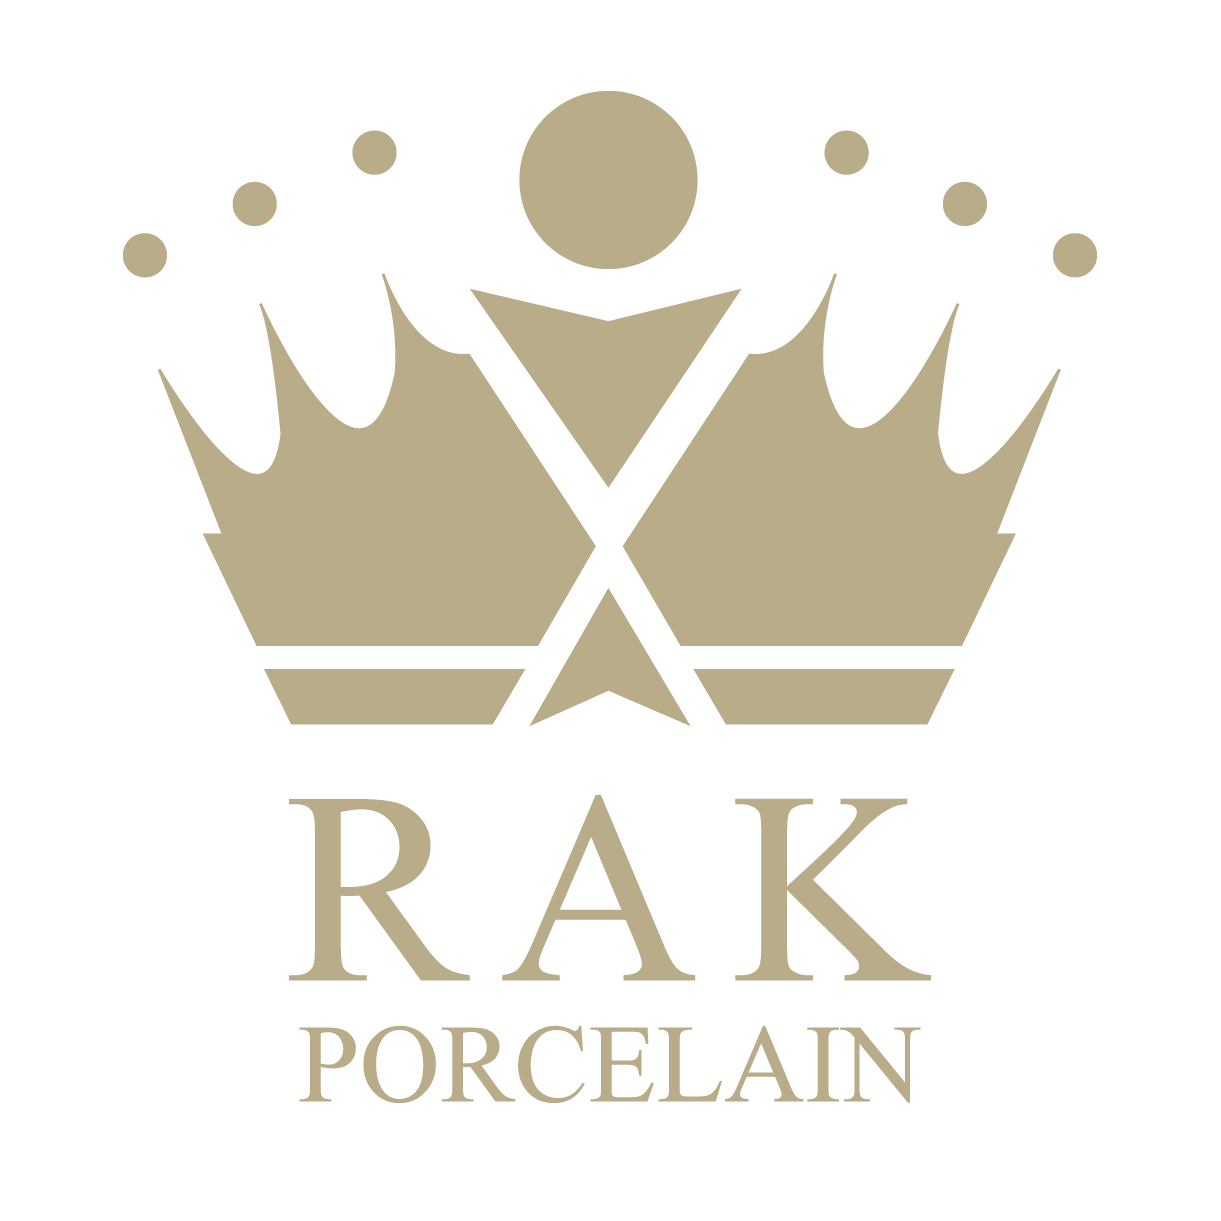 RAK_PORCELAIN_LOGO